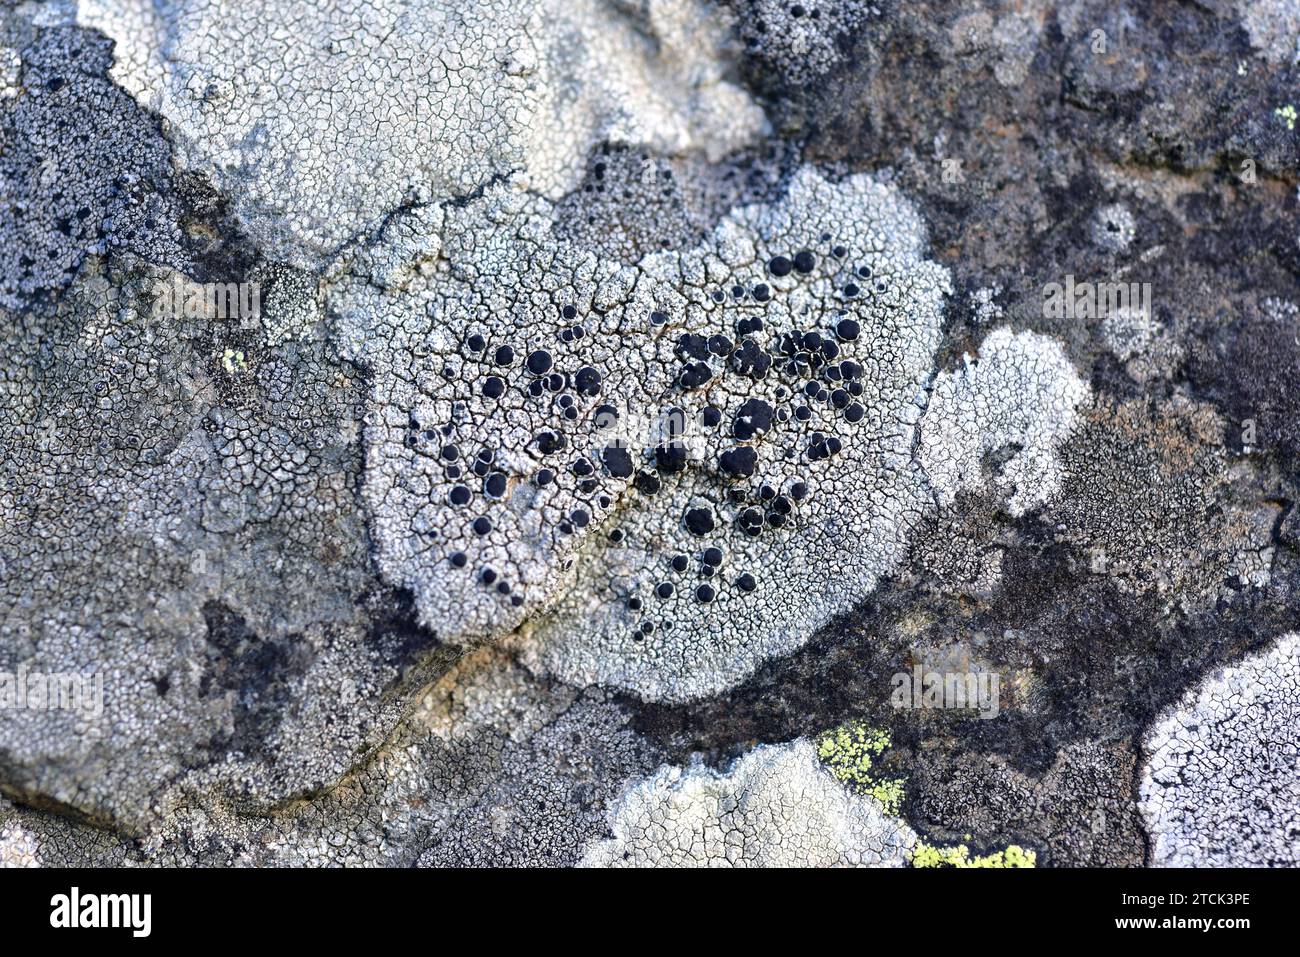 Lecanora schistina or Lecanora praepostera is a crustose lichen with black apothecia. This photo was taken in La Albera, Girona province, Catalonia, S Stock Photo